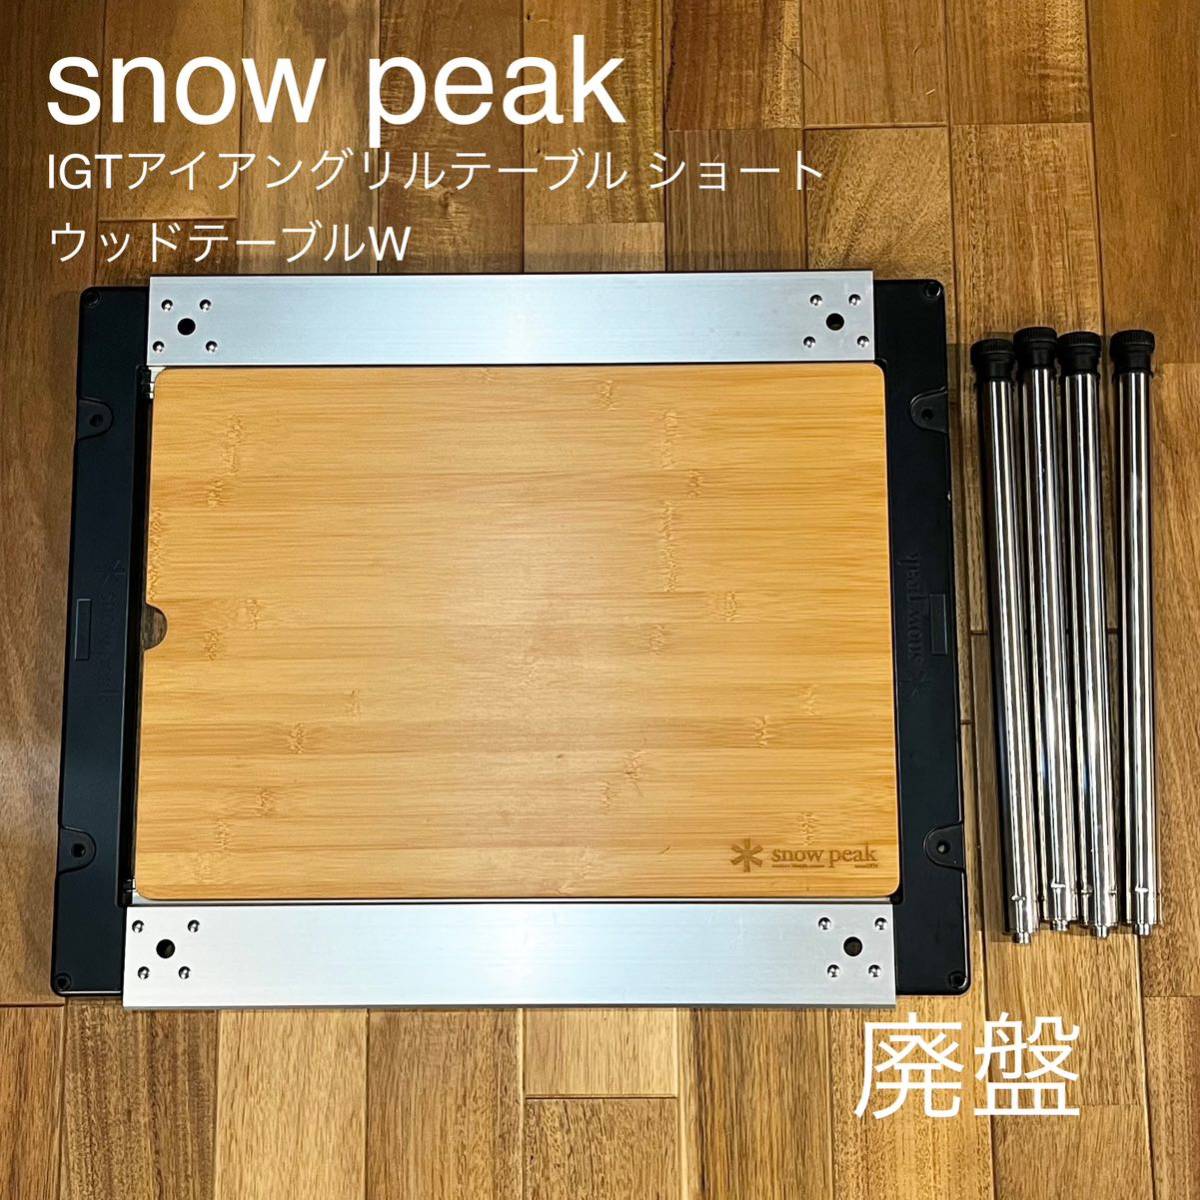 snow peak スノーピーク IGT アイアン グリル テーブル ショート 廃盤 希少 フレーム ユニット